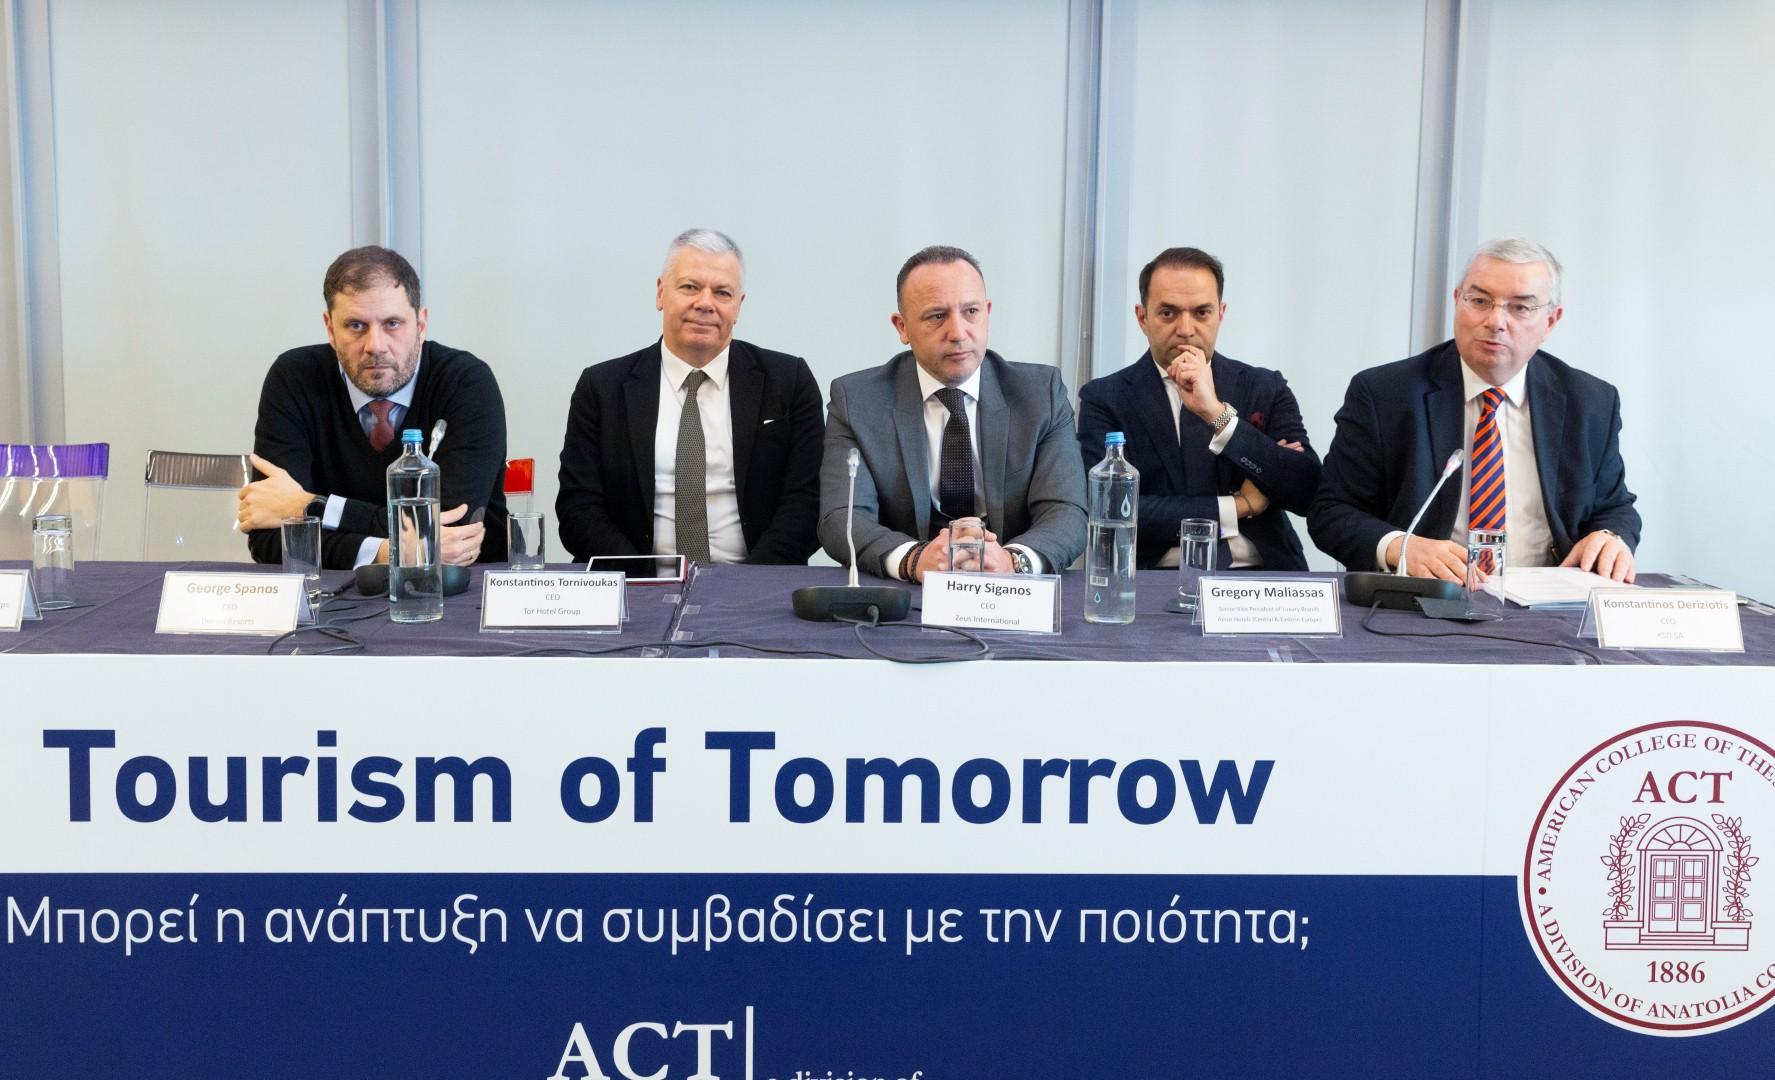 ACT Tourism of Tomorrow panel 1